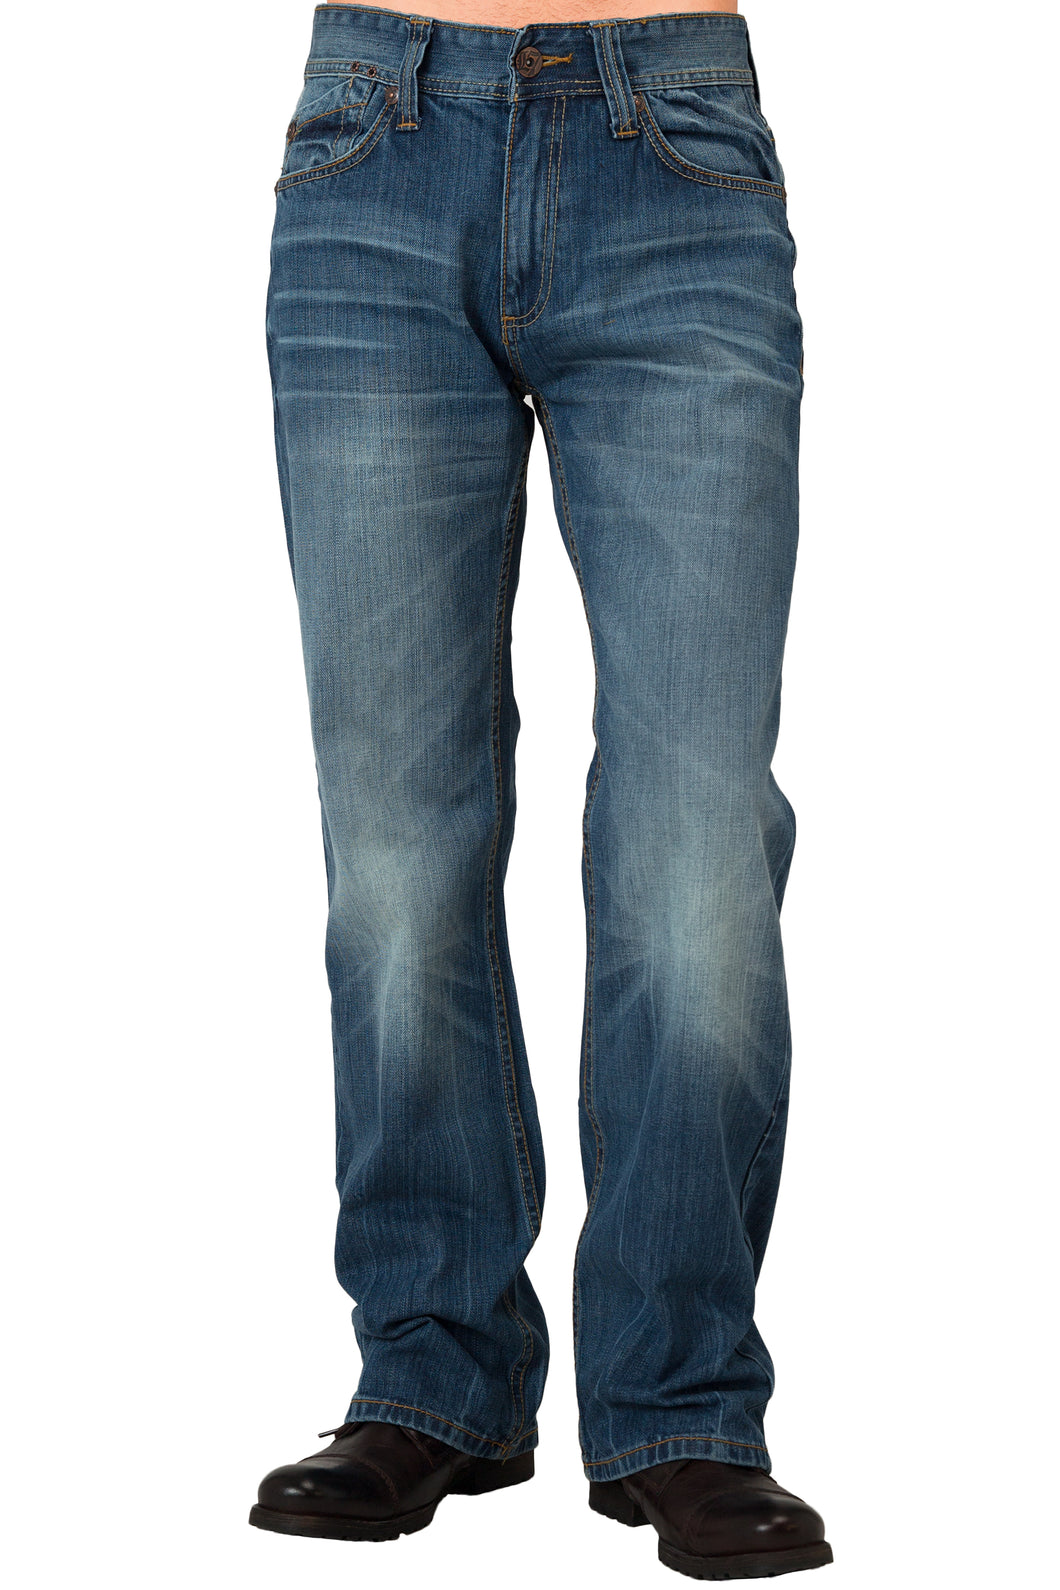 Men's Midrise Relaxed Bootcut Premium Jeans Medium Blue Vintage Whisker Wash